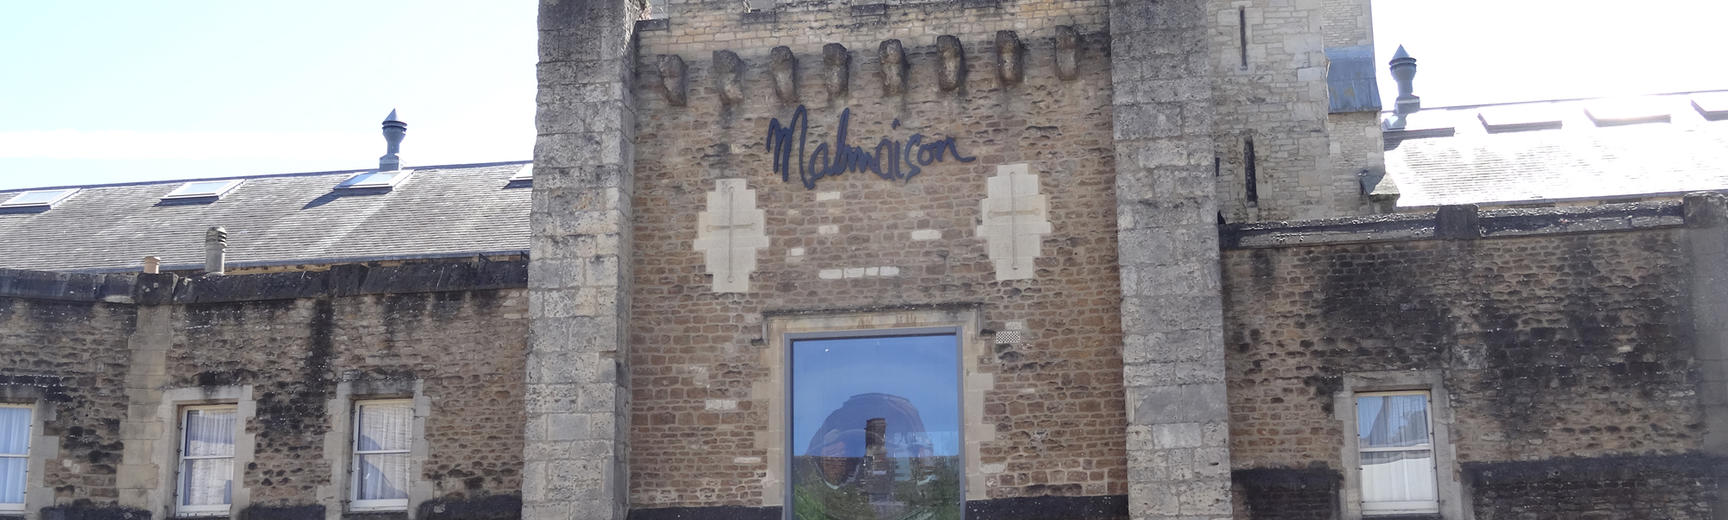 The exterior of Malmaison restaurant in Oxford